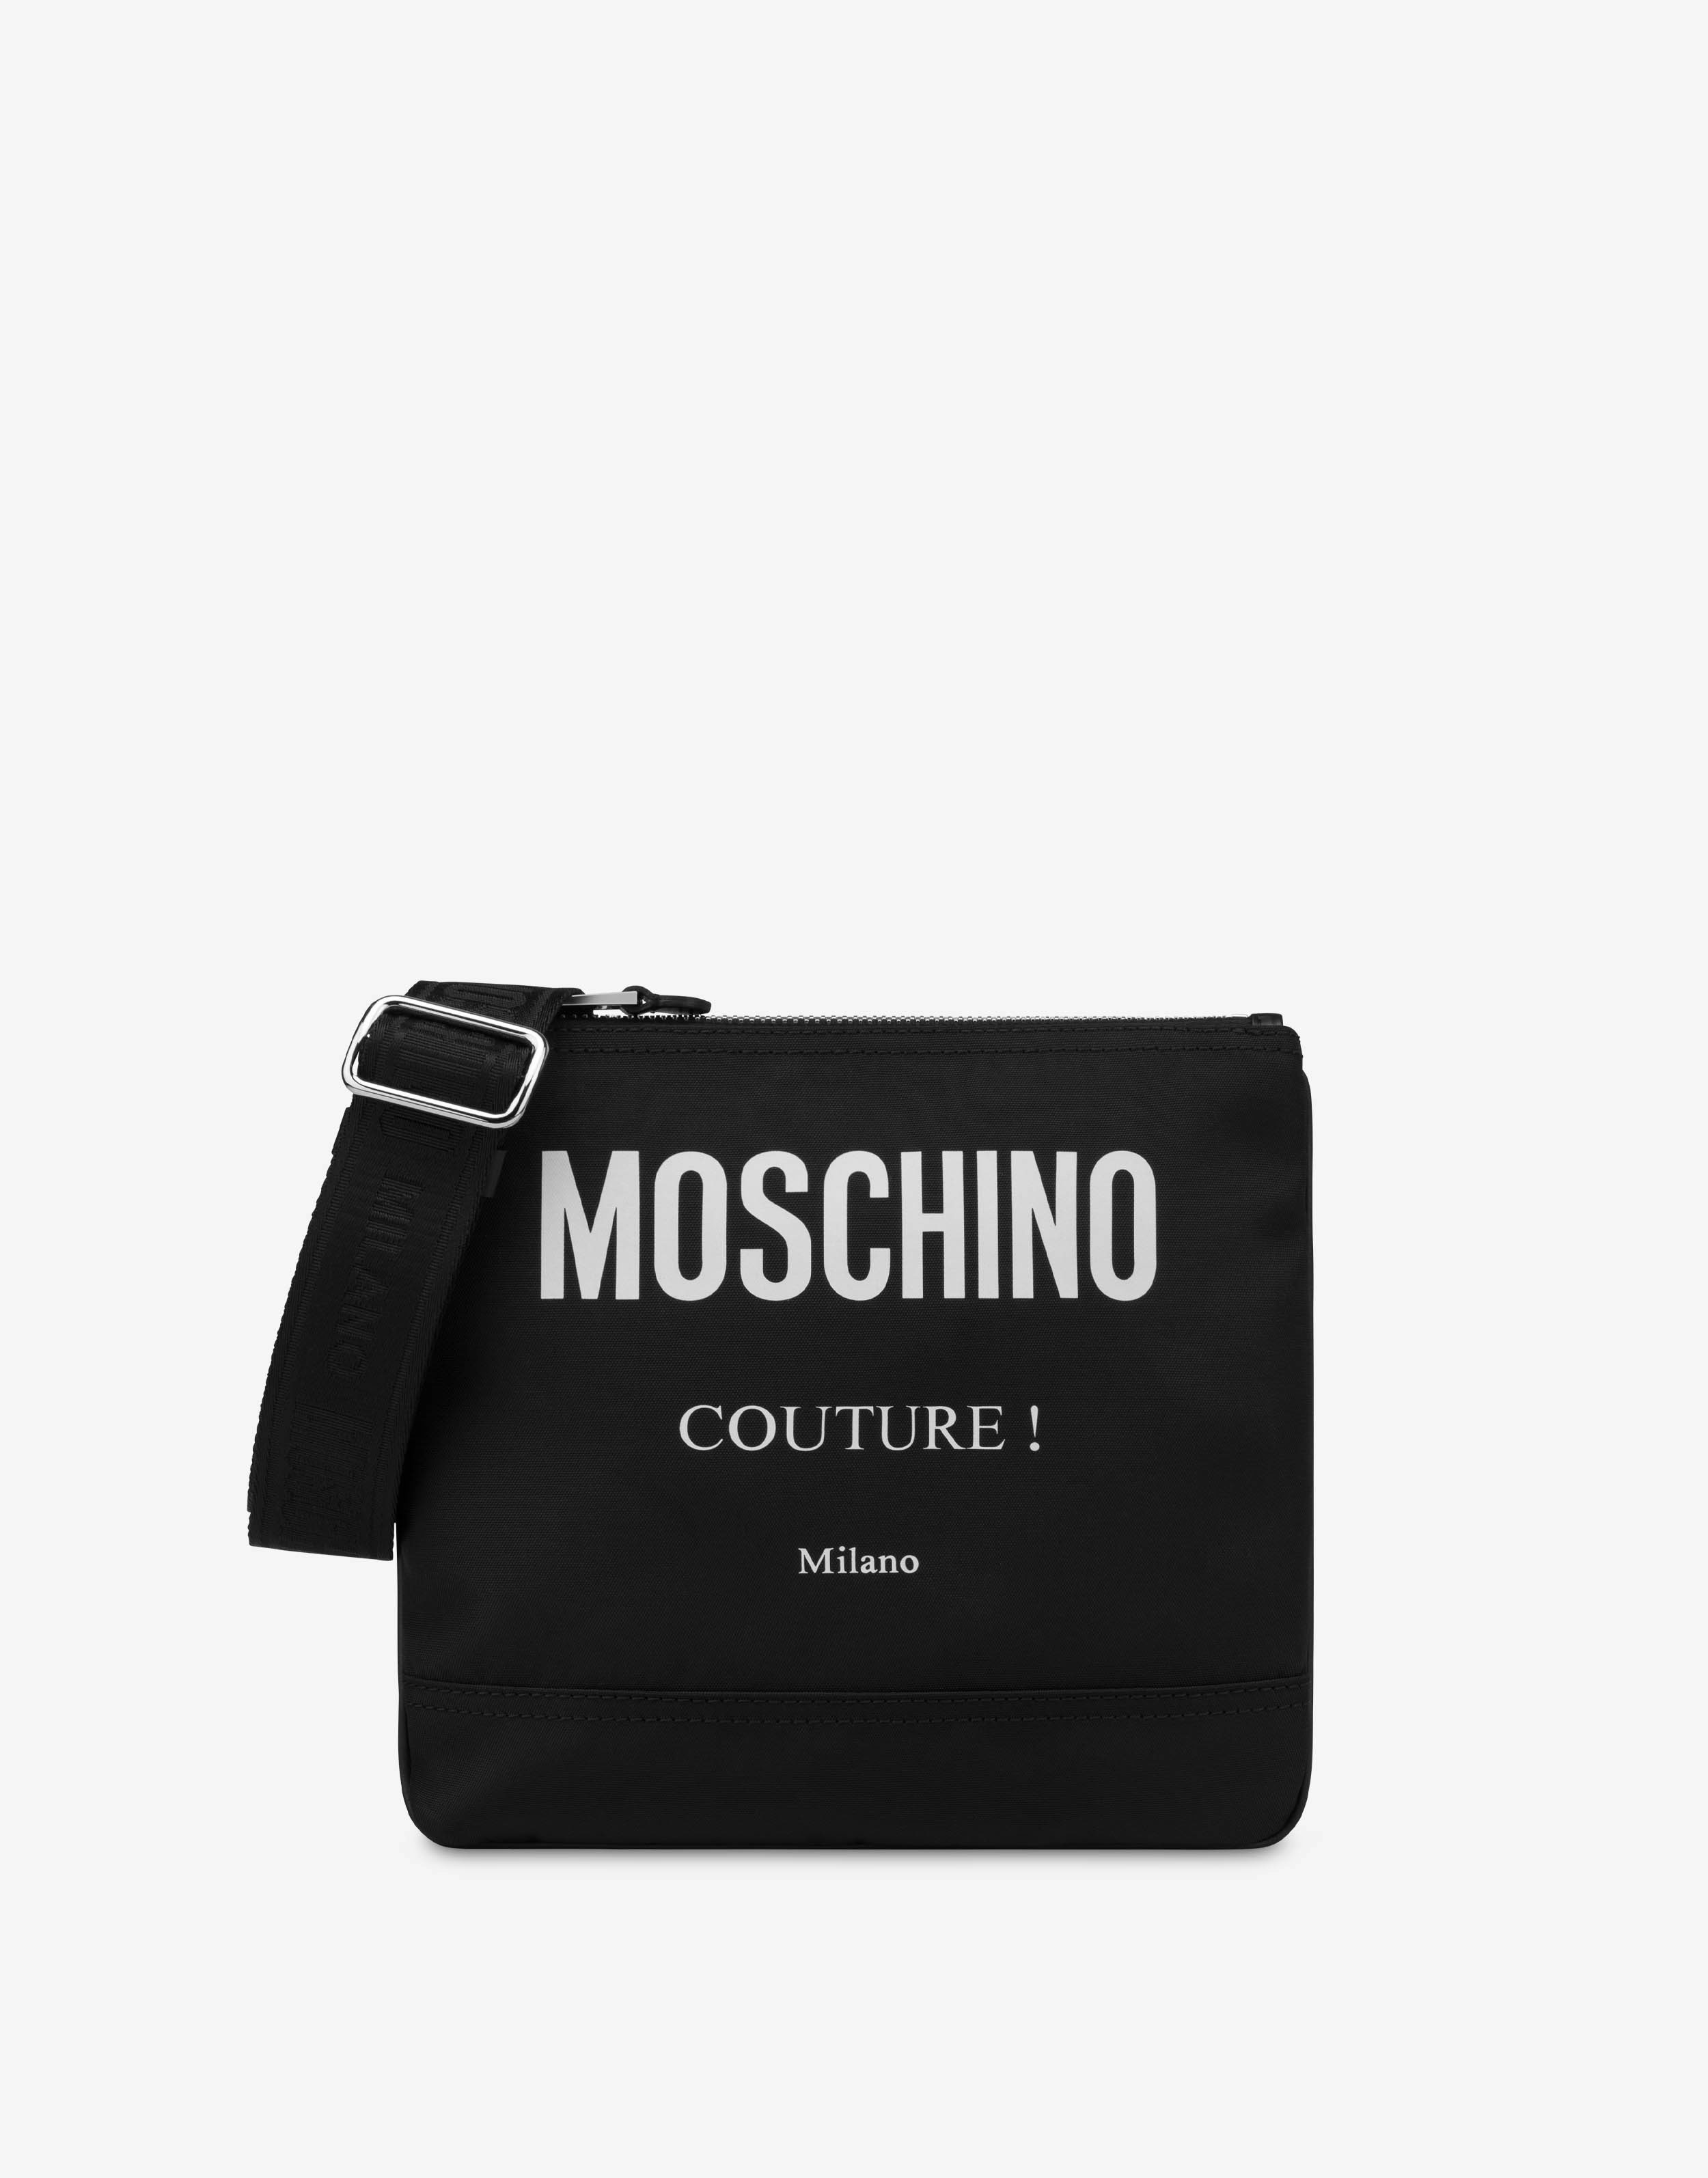 Moschino Couture shoulder bag